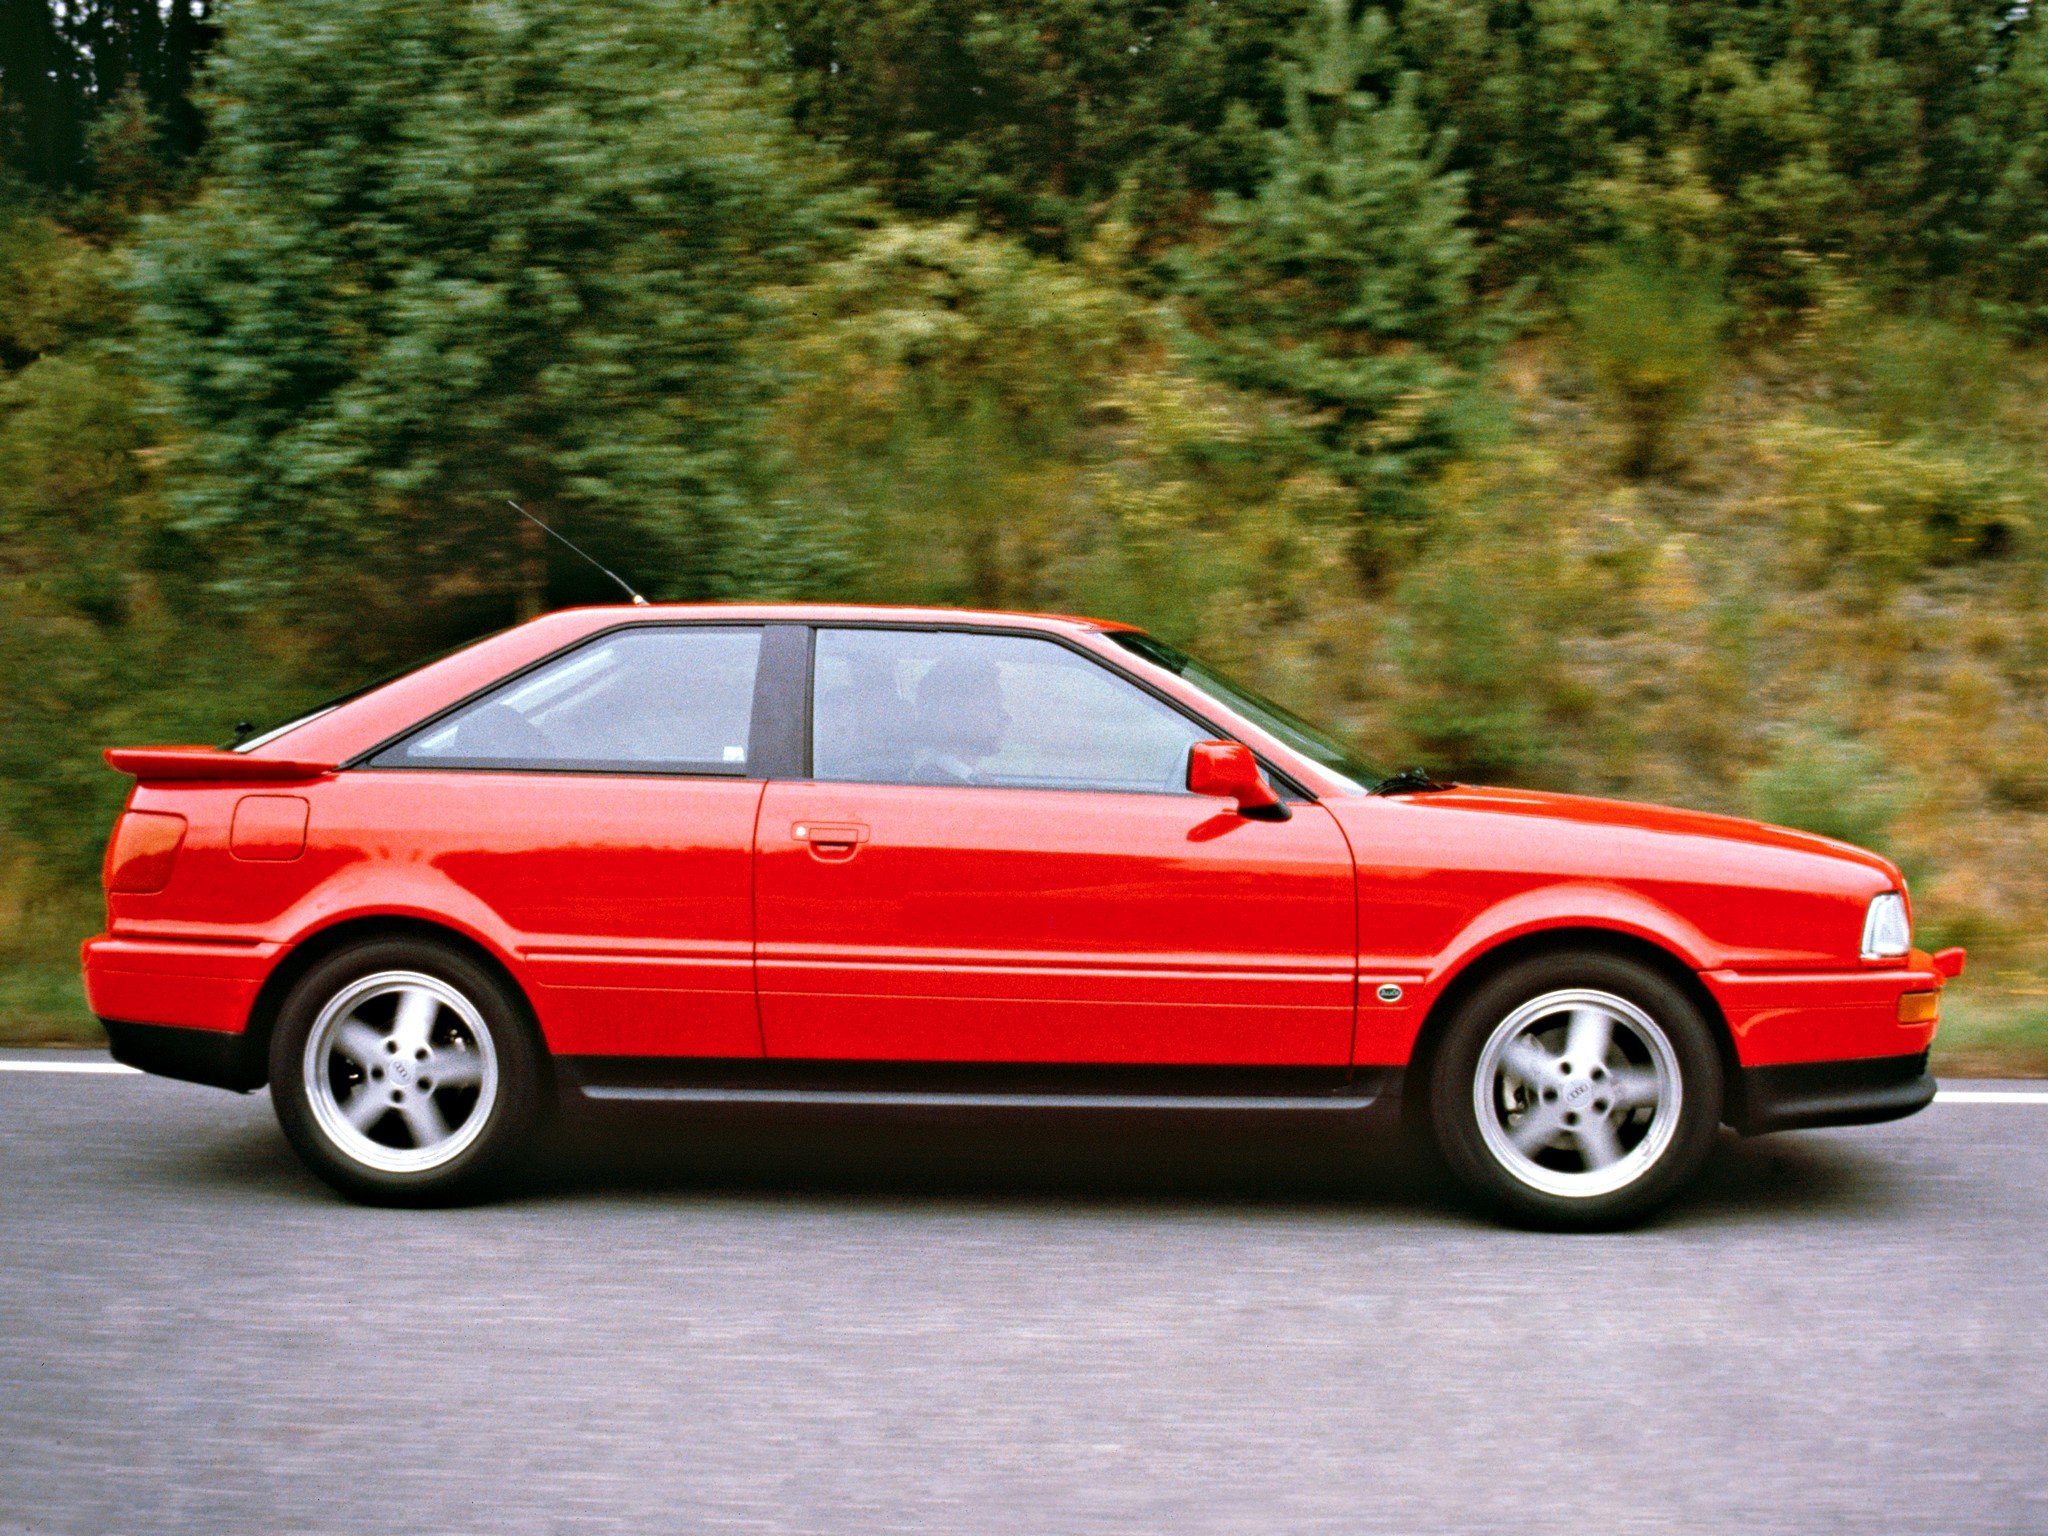 1990, Audi, S 2, Coupe Wallpaper